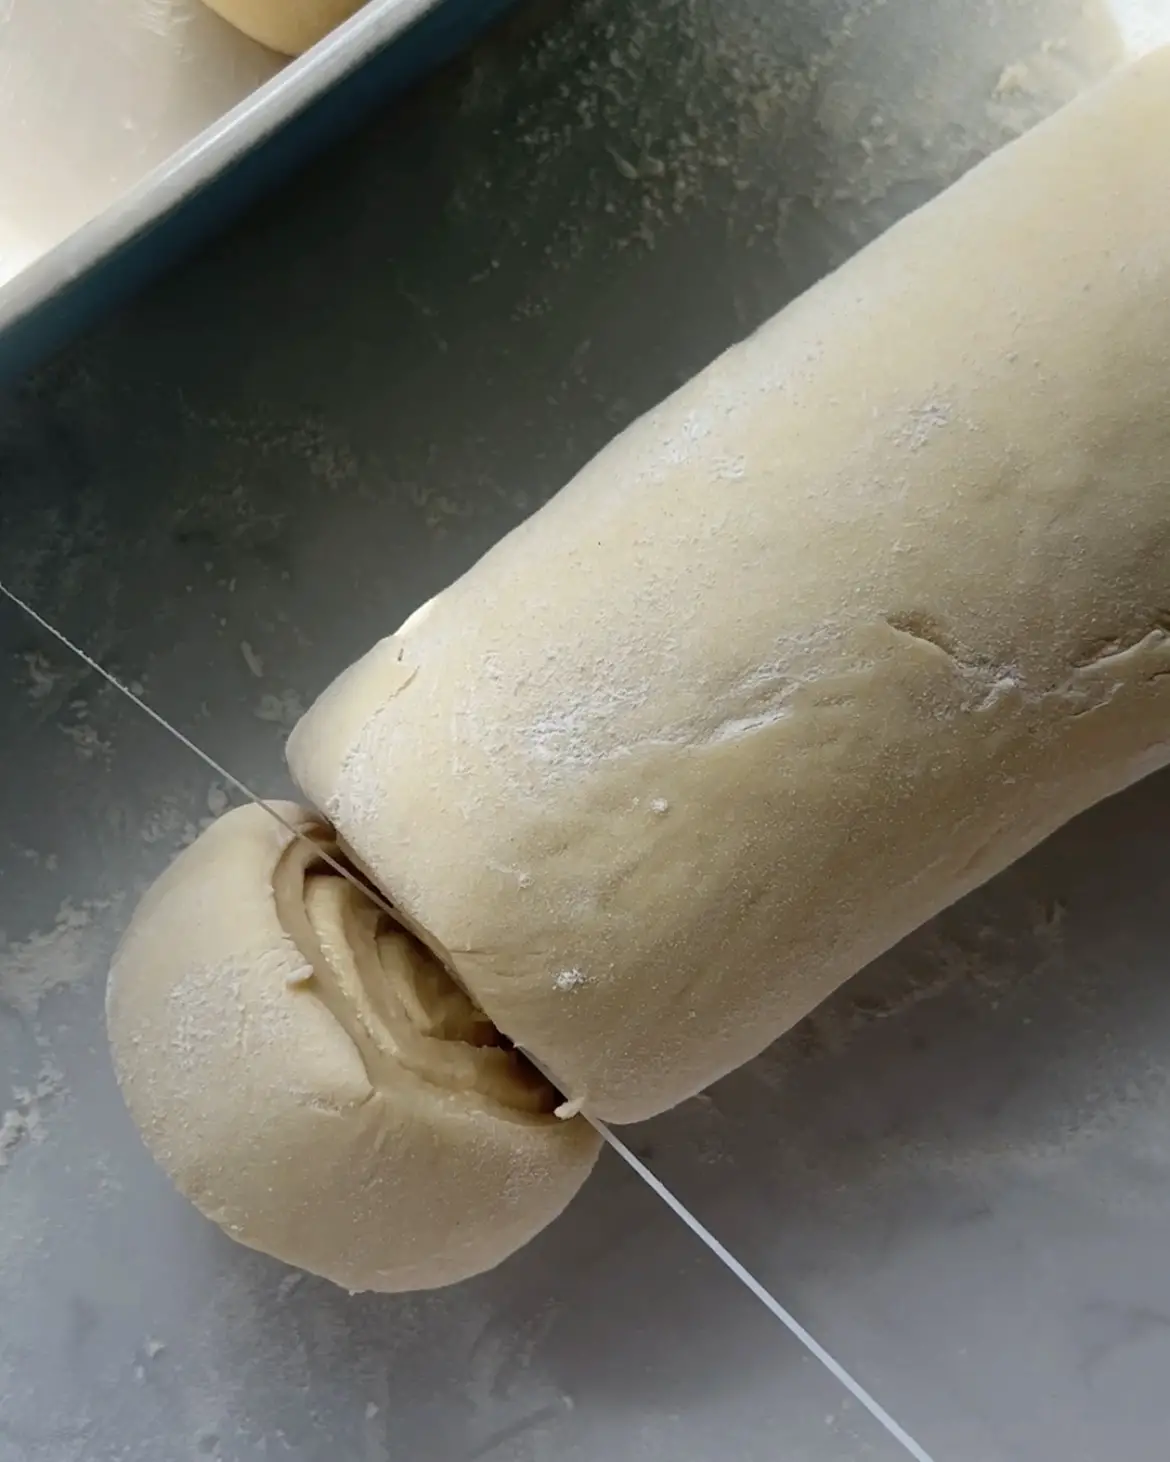 cut the rolls